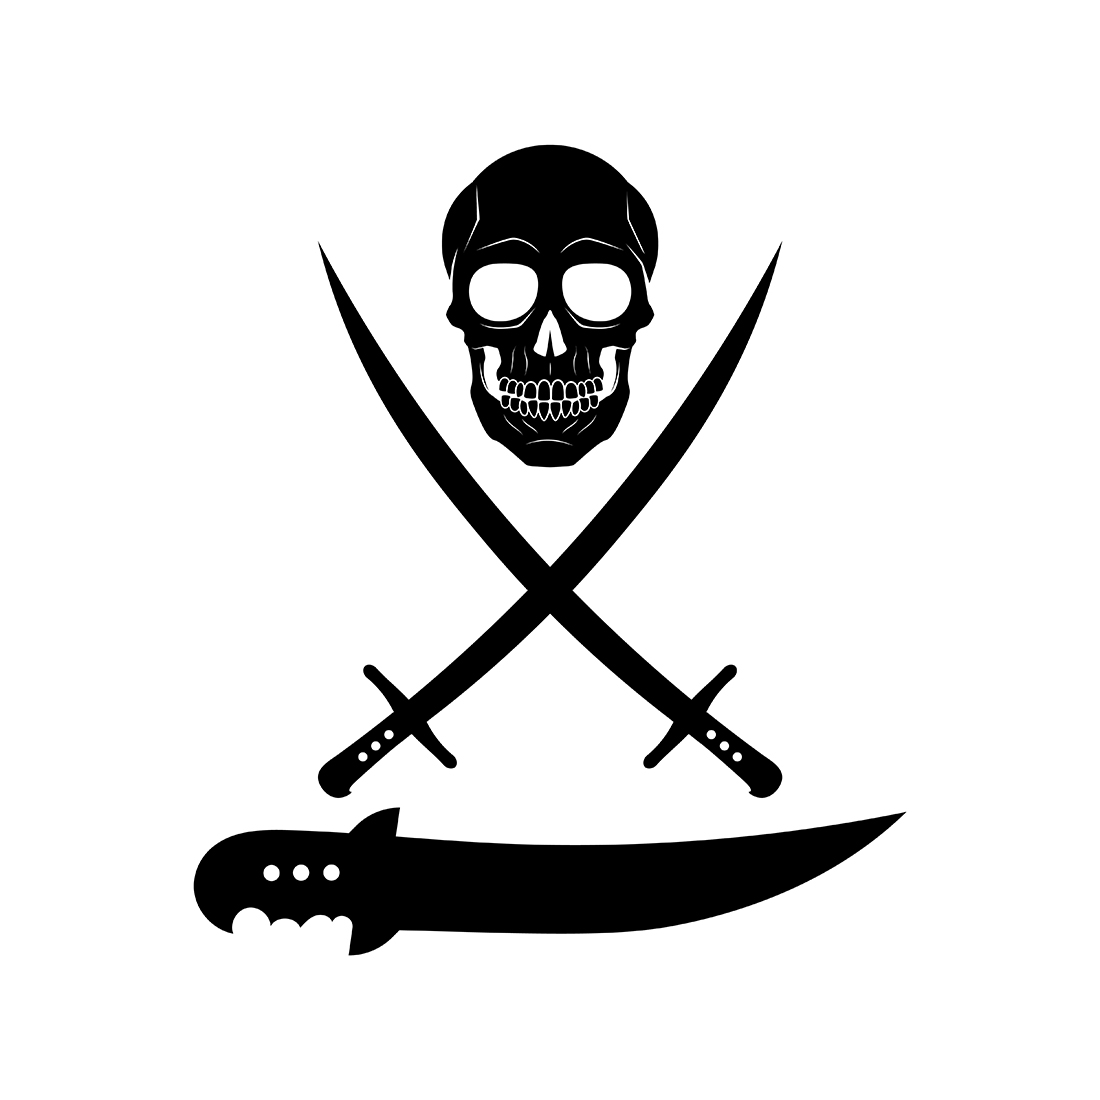 Skull, Two Crossed Swords, knife preview image.